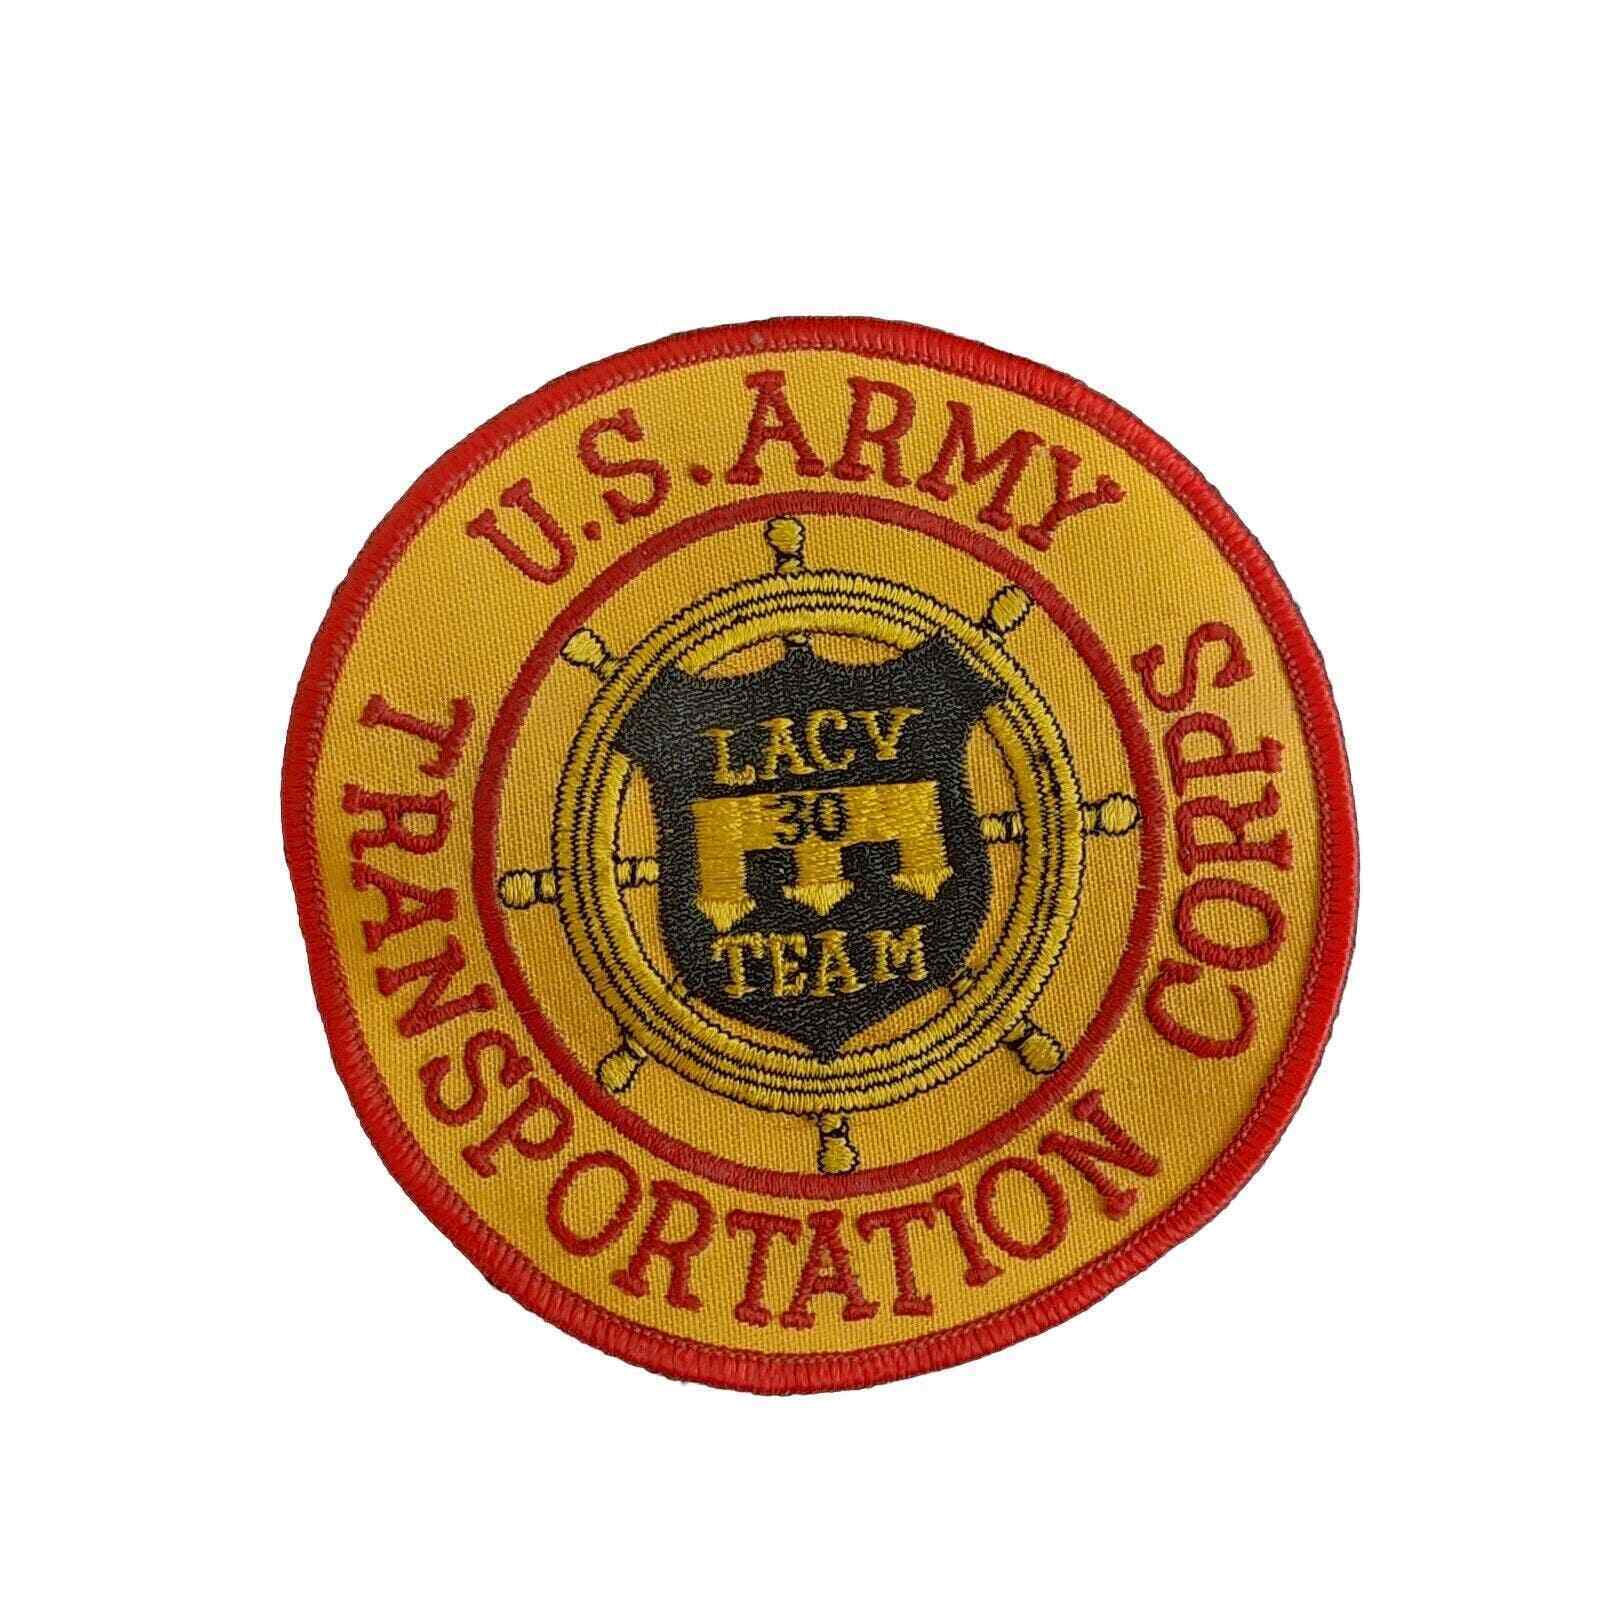 Vintage Patch, U.S. Army Transportation Corps, LACV-30 Team